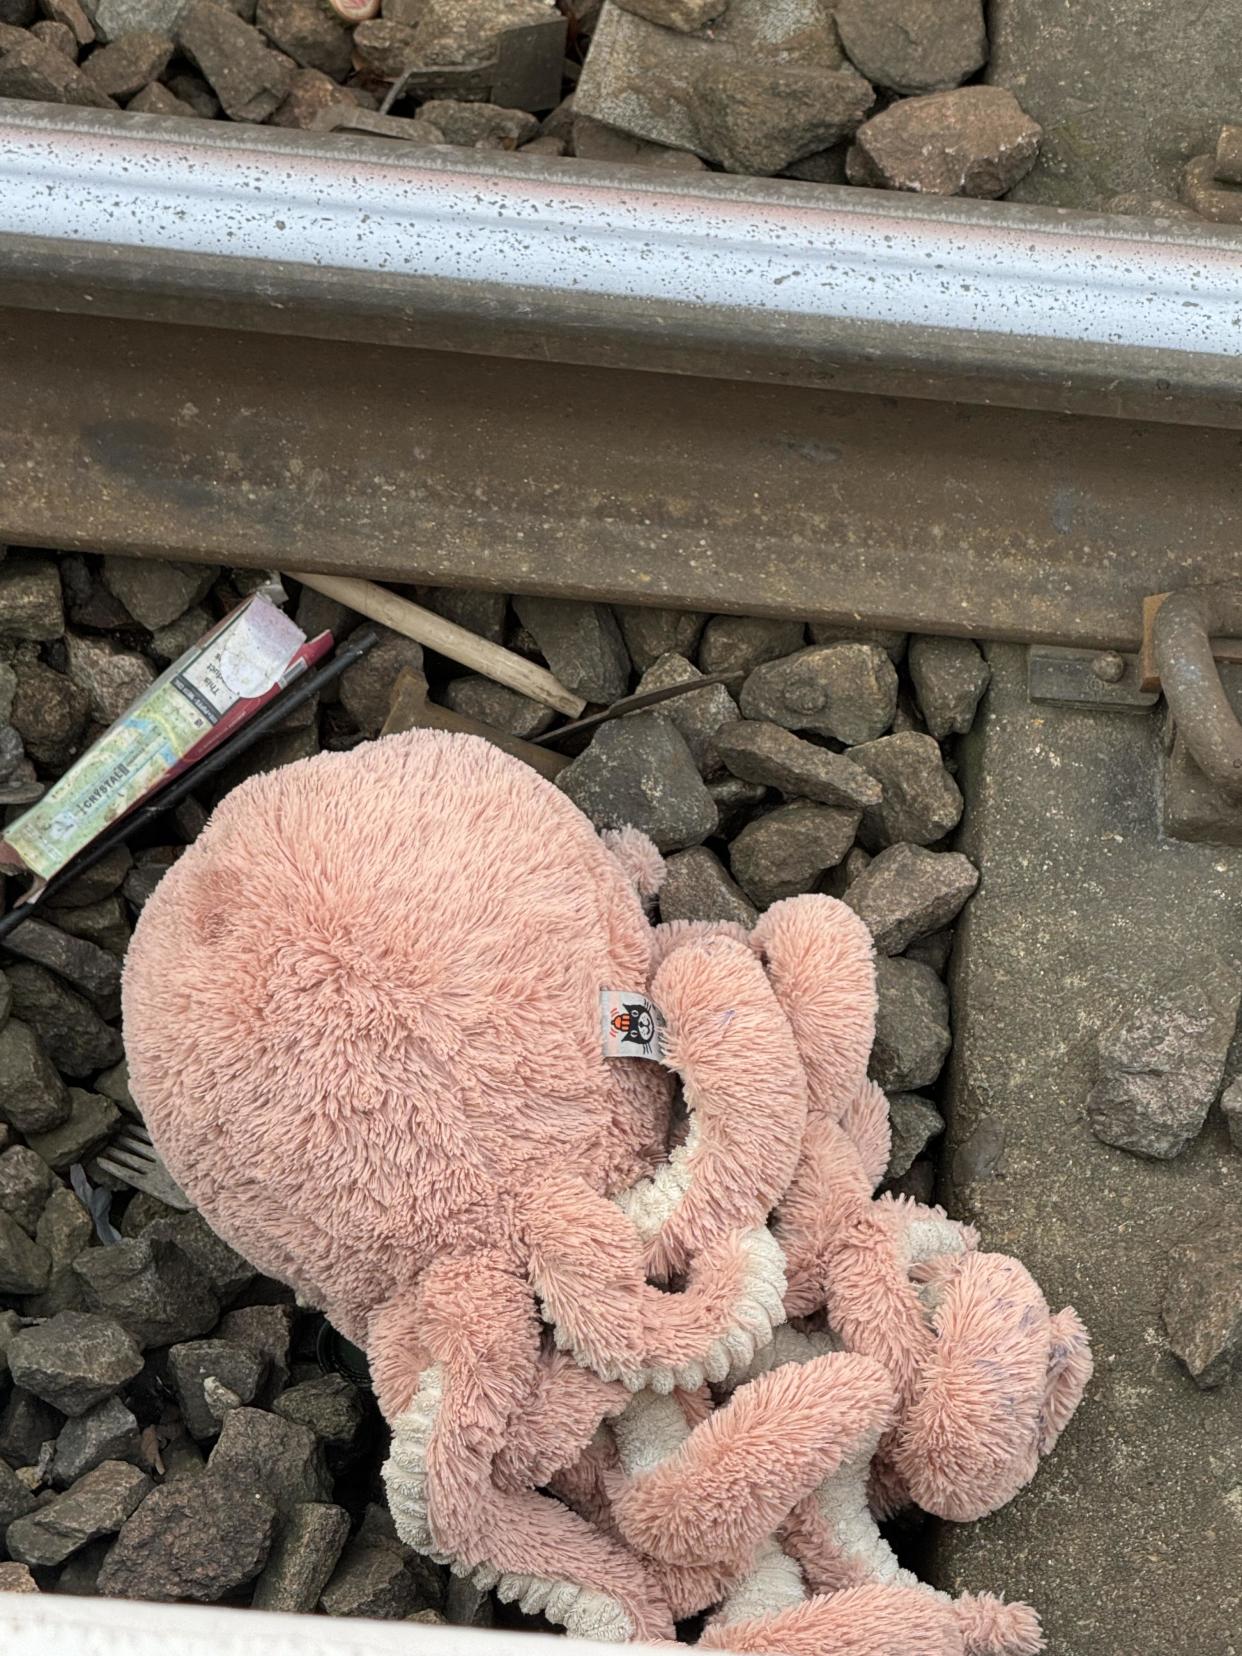 Toy octopus on train tracks 